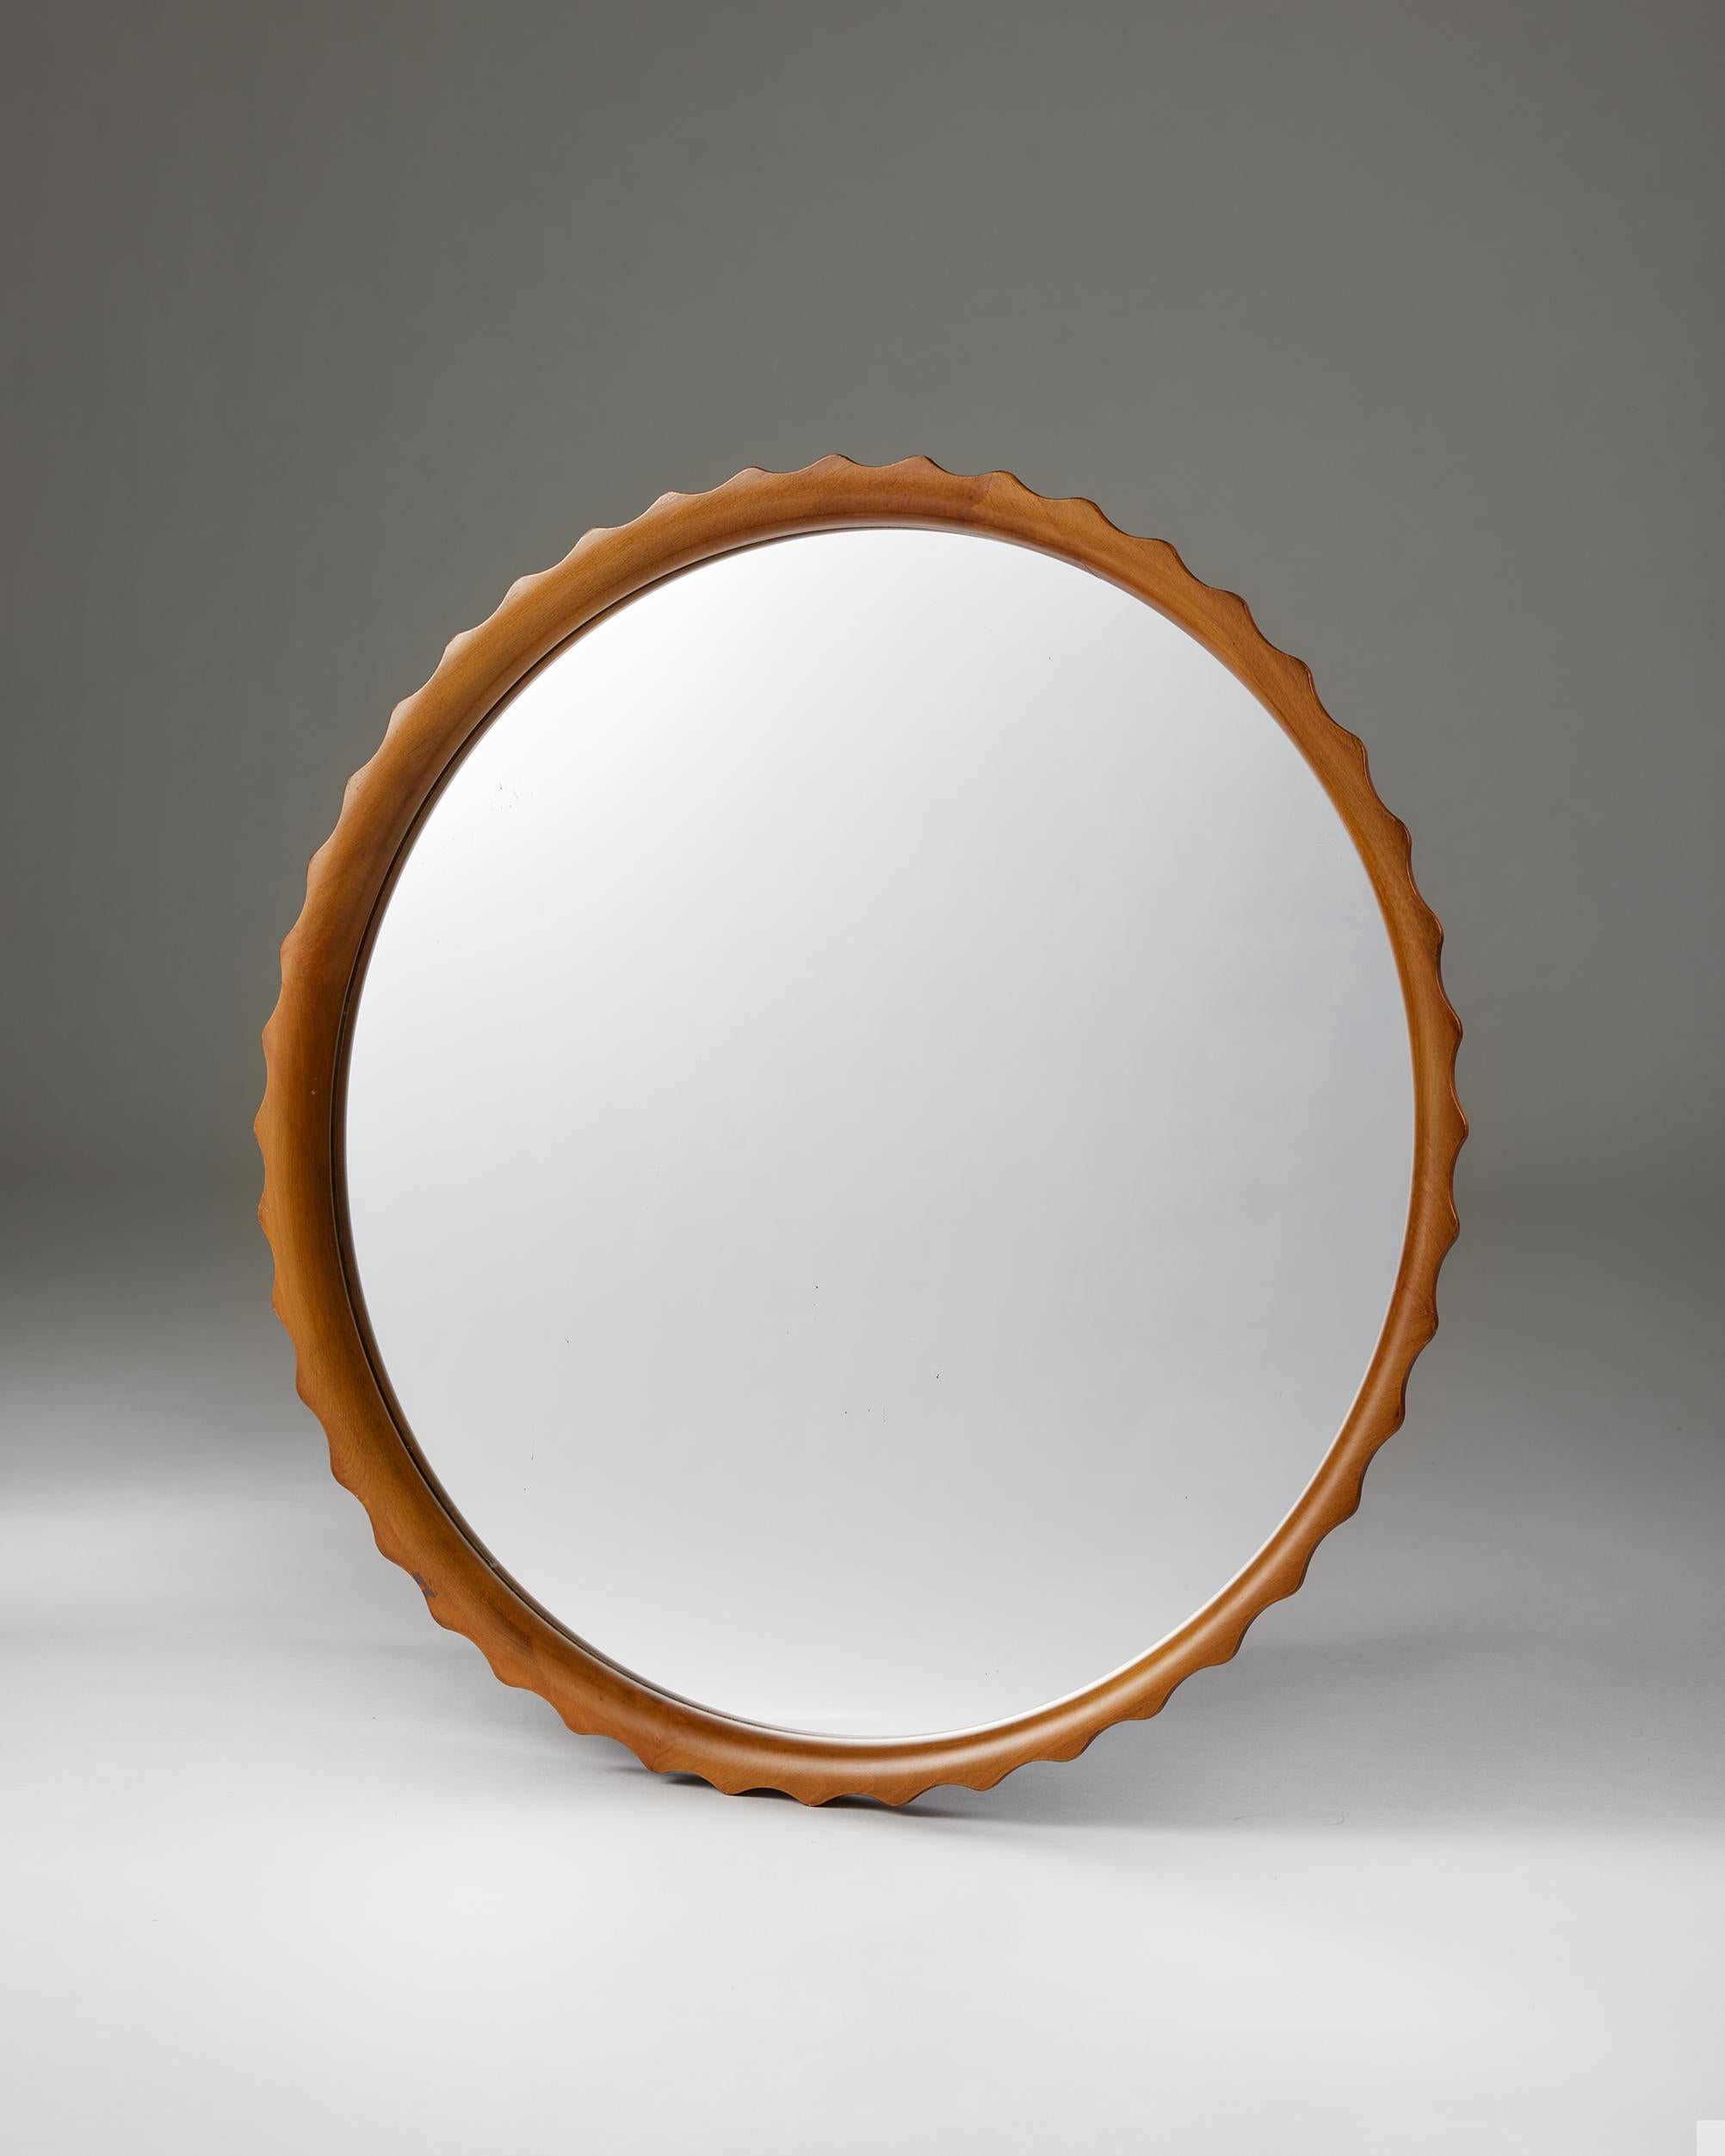 Mirror, anonymous,
Sweden, 1940s.

Beech wood and mirrored glass.

Depth: 4 cm
Diameter: 64 cm